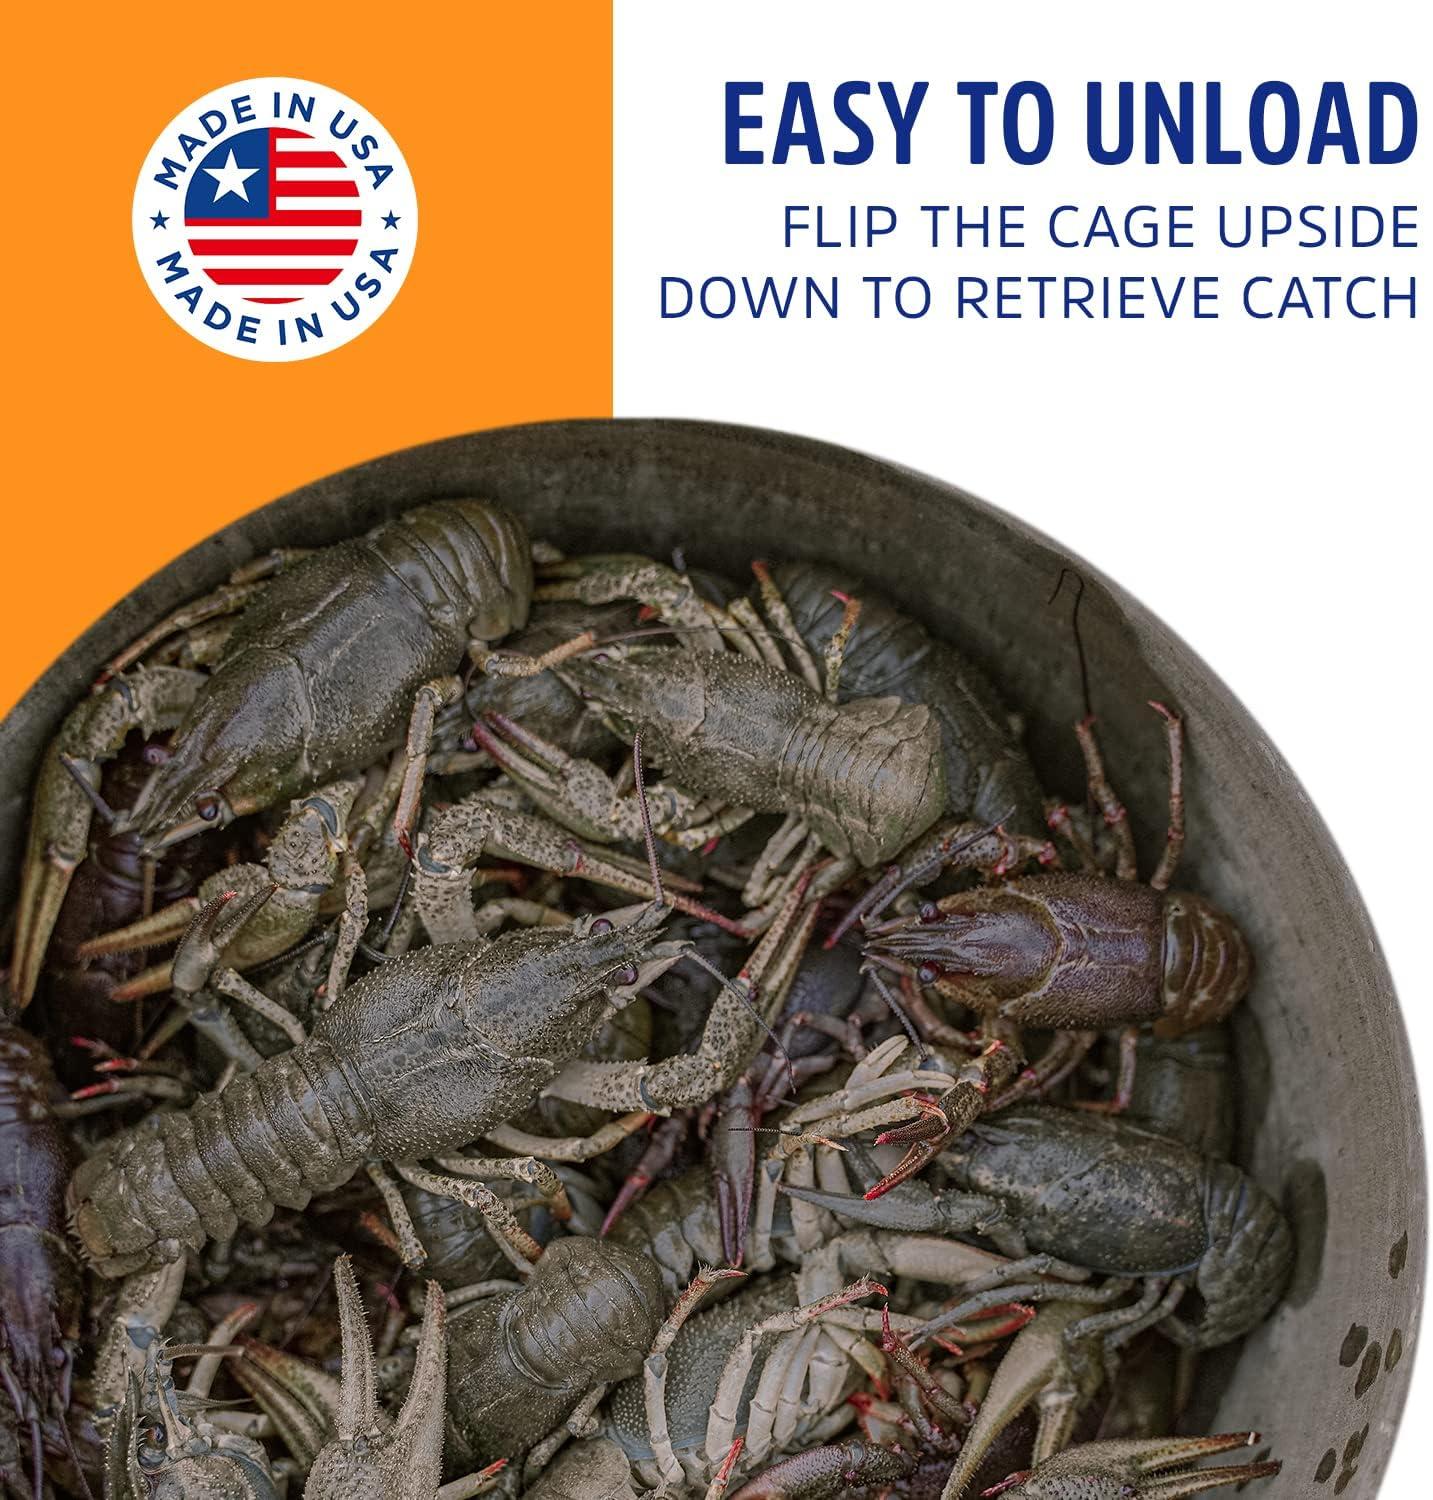 Protoco - CT18R - 11 x 18 ( x 1 Mesh) - Crawfish and Shrimp Trap,  Freshwater & Saltwater Cage Style Fishing Trap for Crawfish, Crayfish,  Crawdads, Shrimp - Black